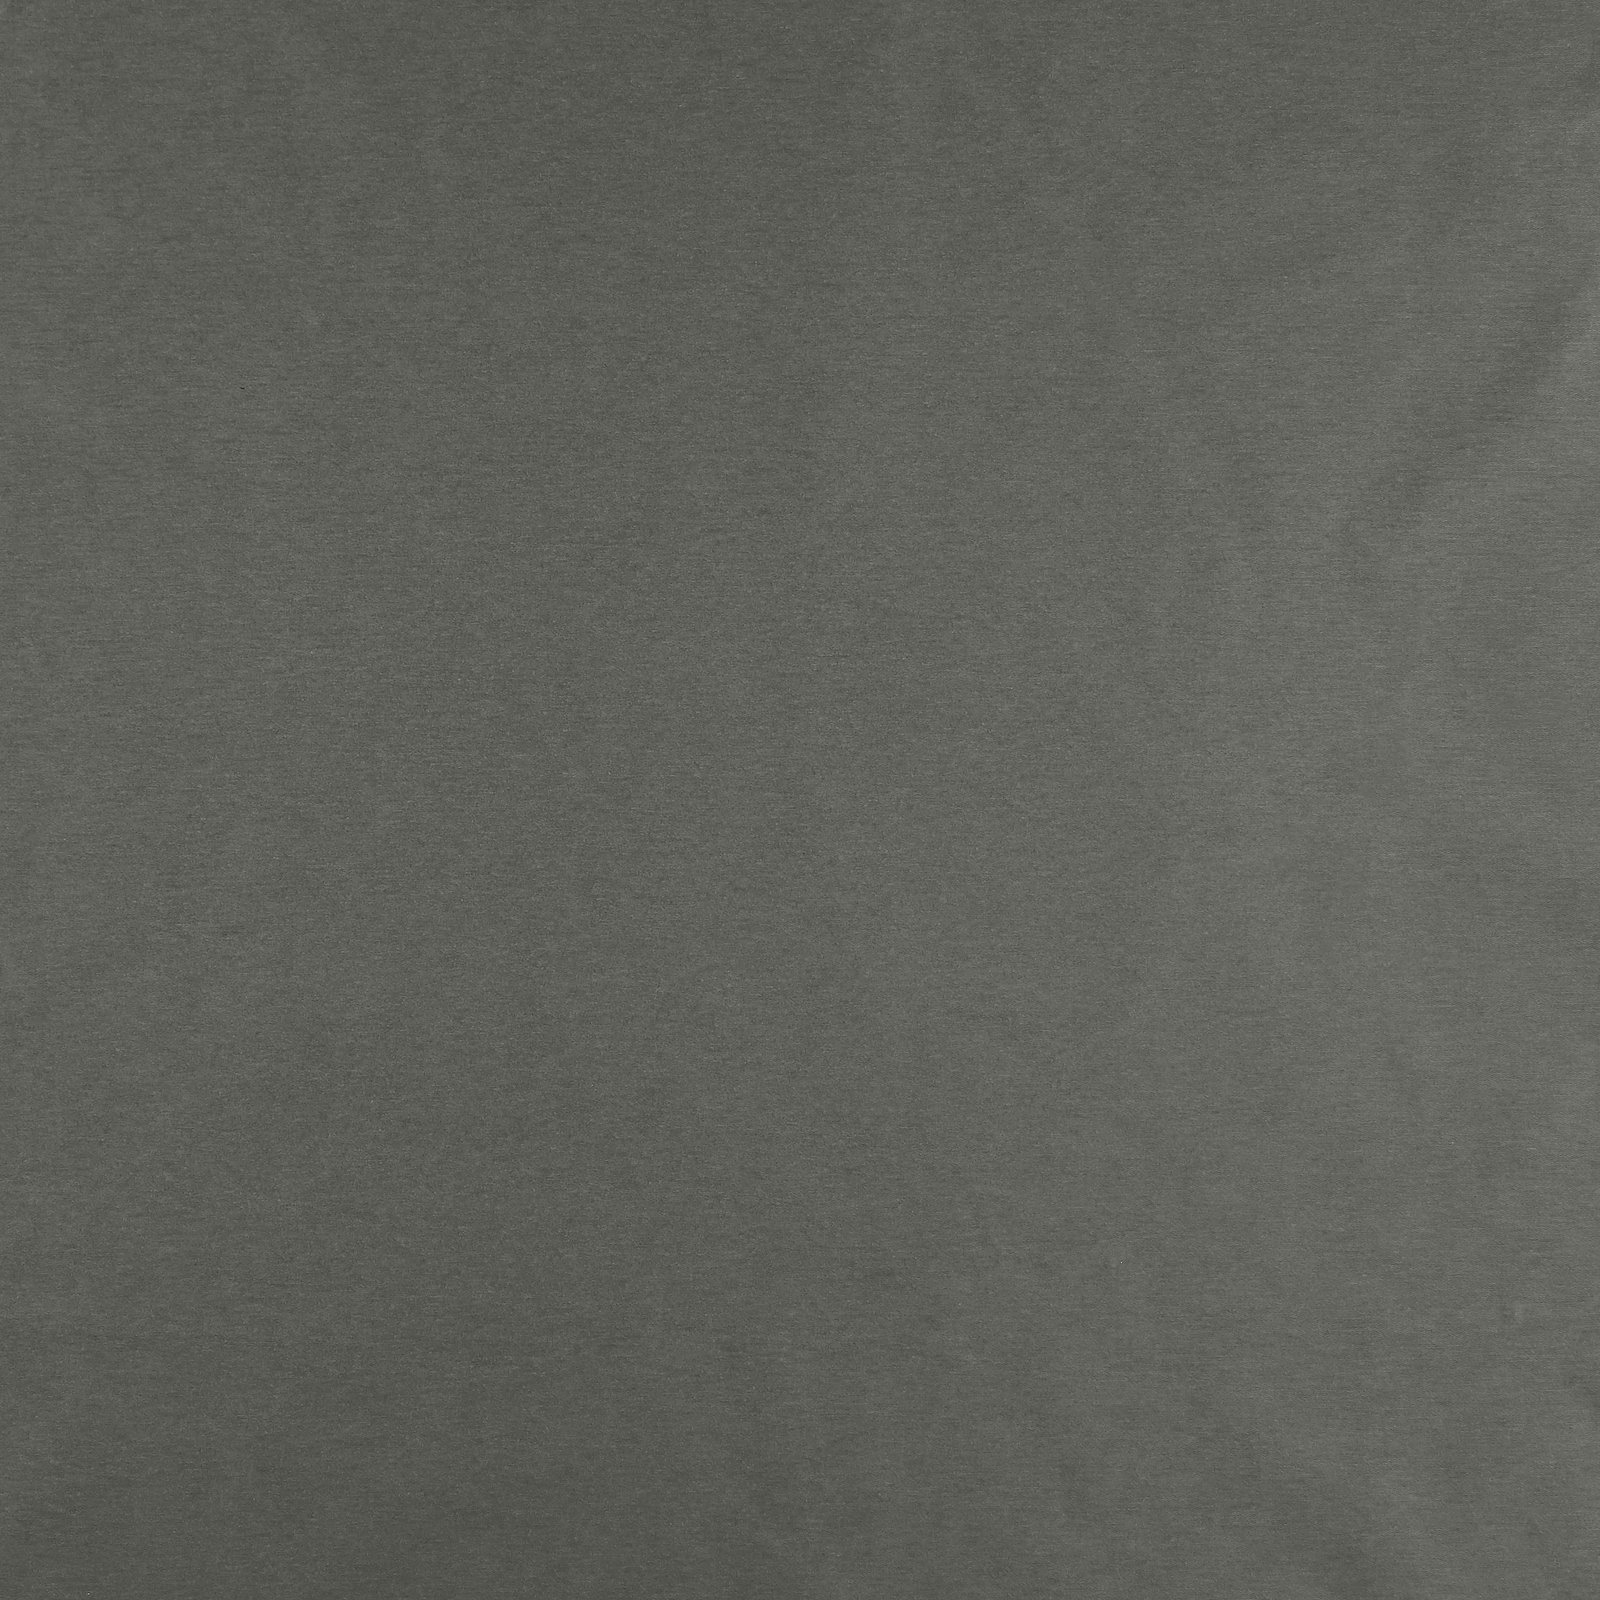 Tekstilvoksdug mørk grå 158-160cm bred 870253_pack_solid